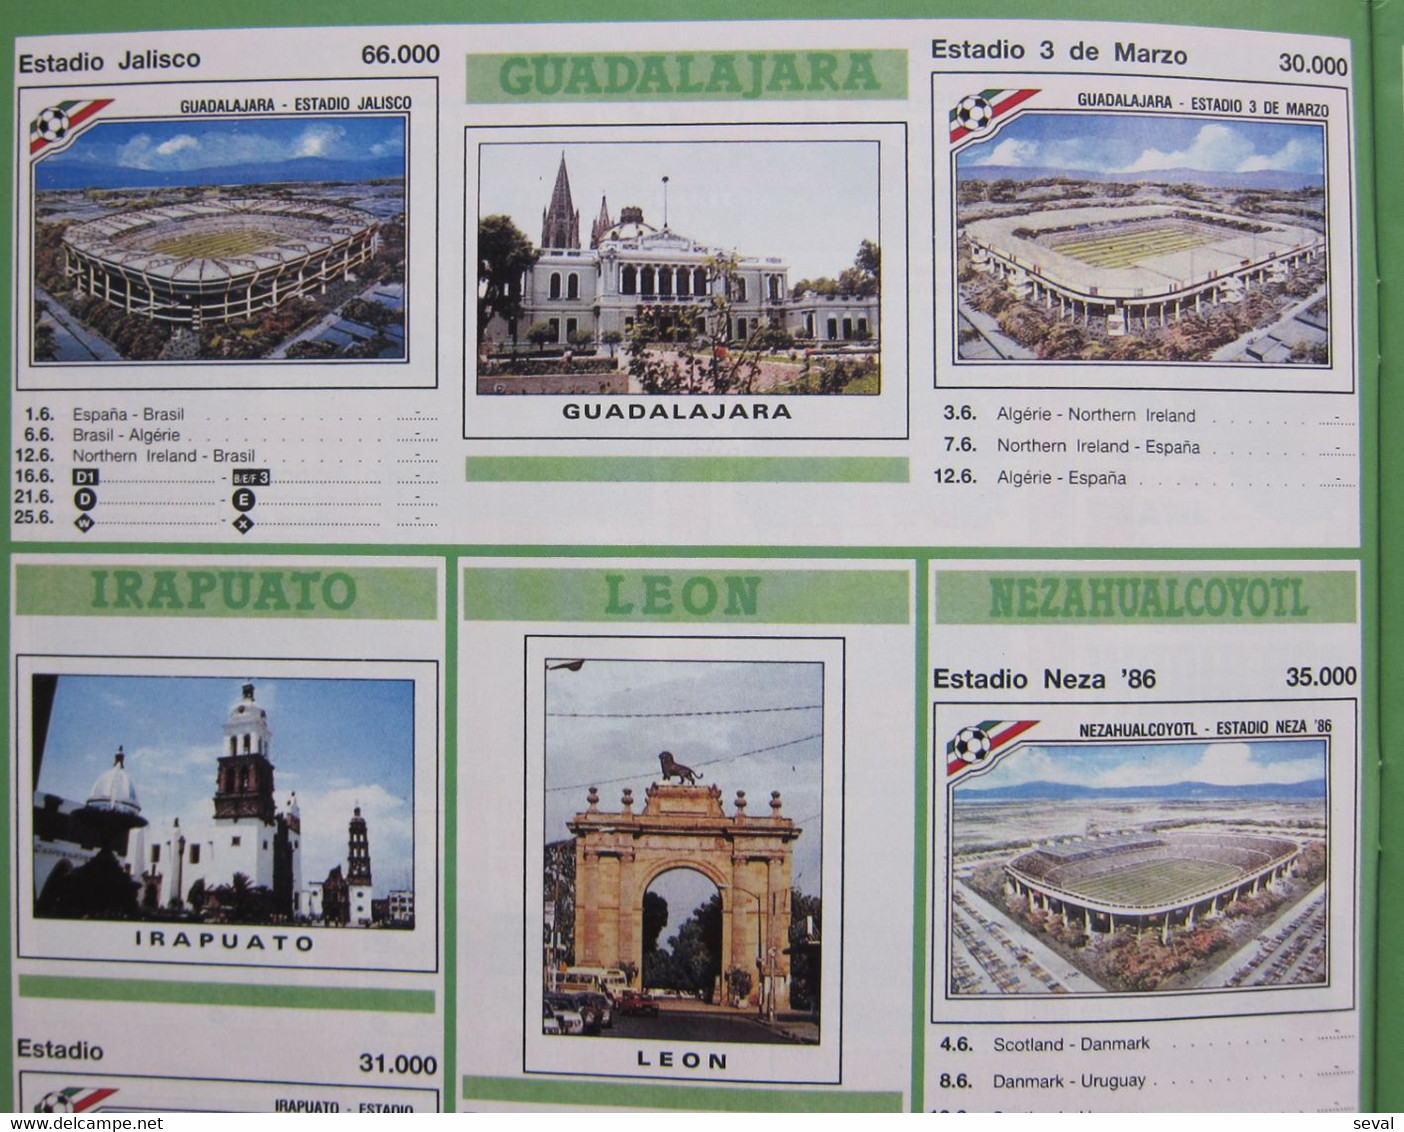 Panini MEXICO 1986 Mundial Football Album Rare Reproduction pls see DESCRIPTION